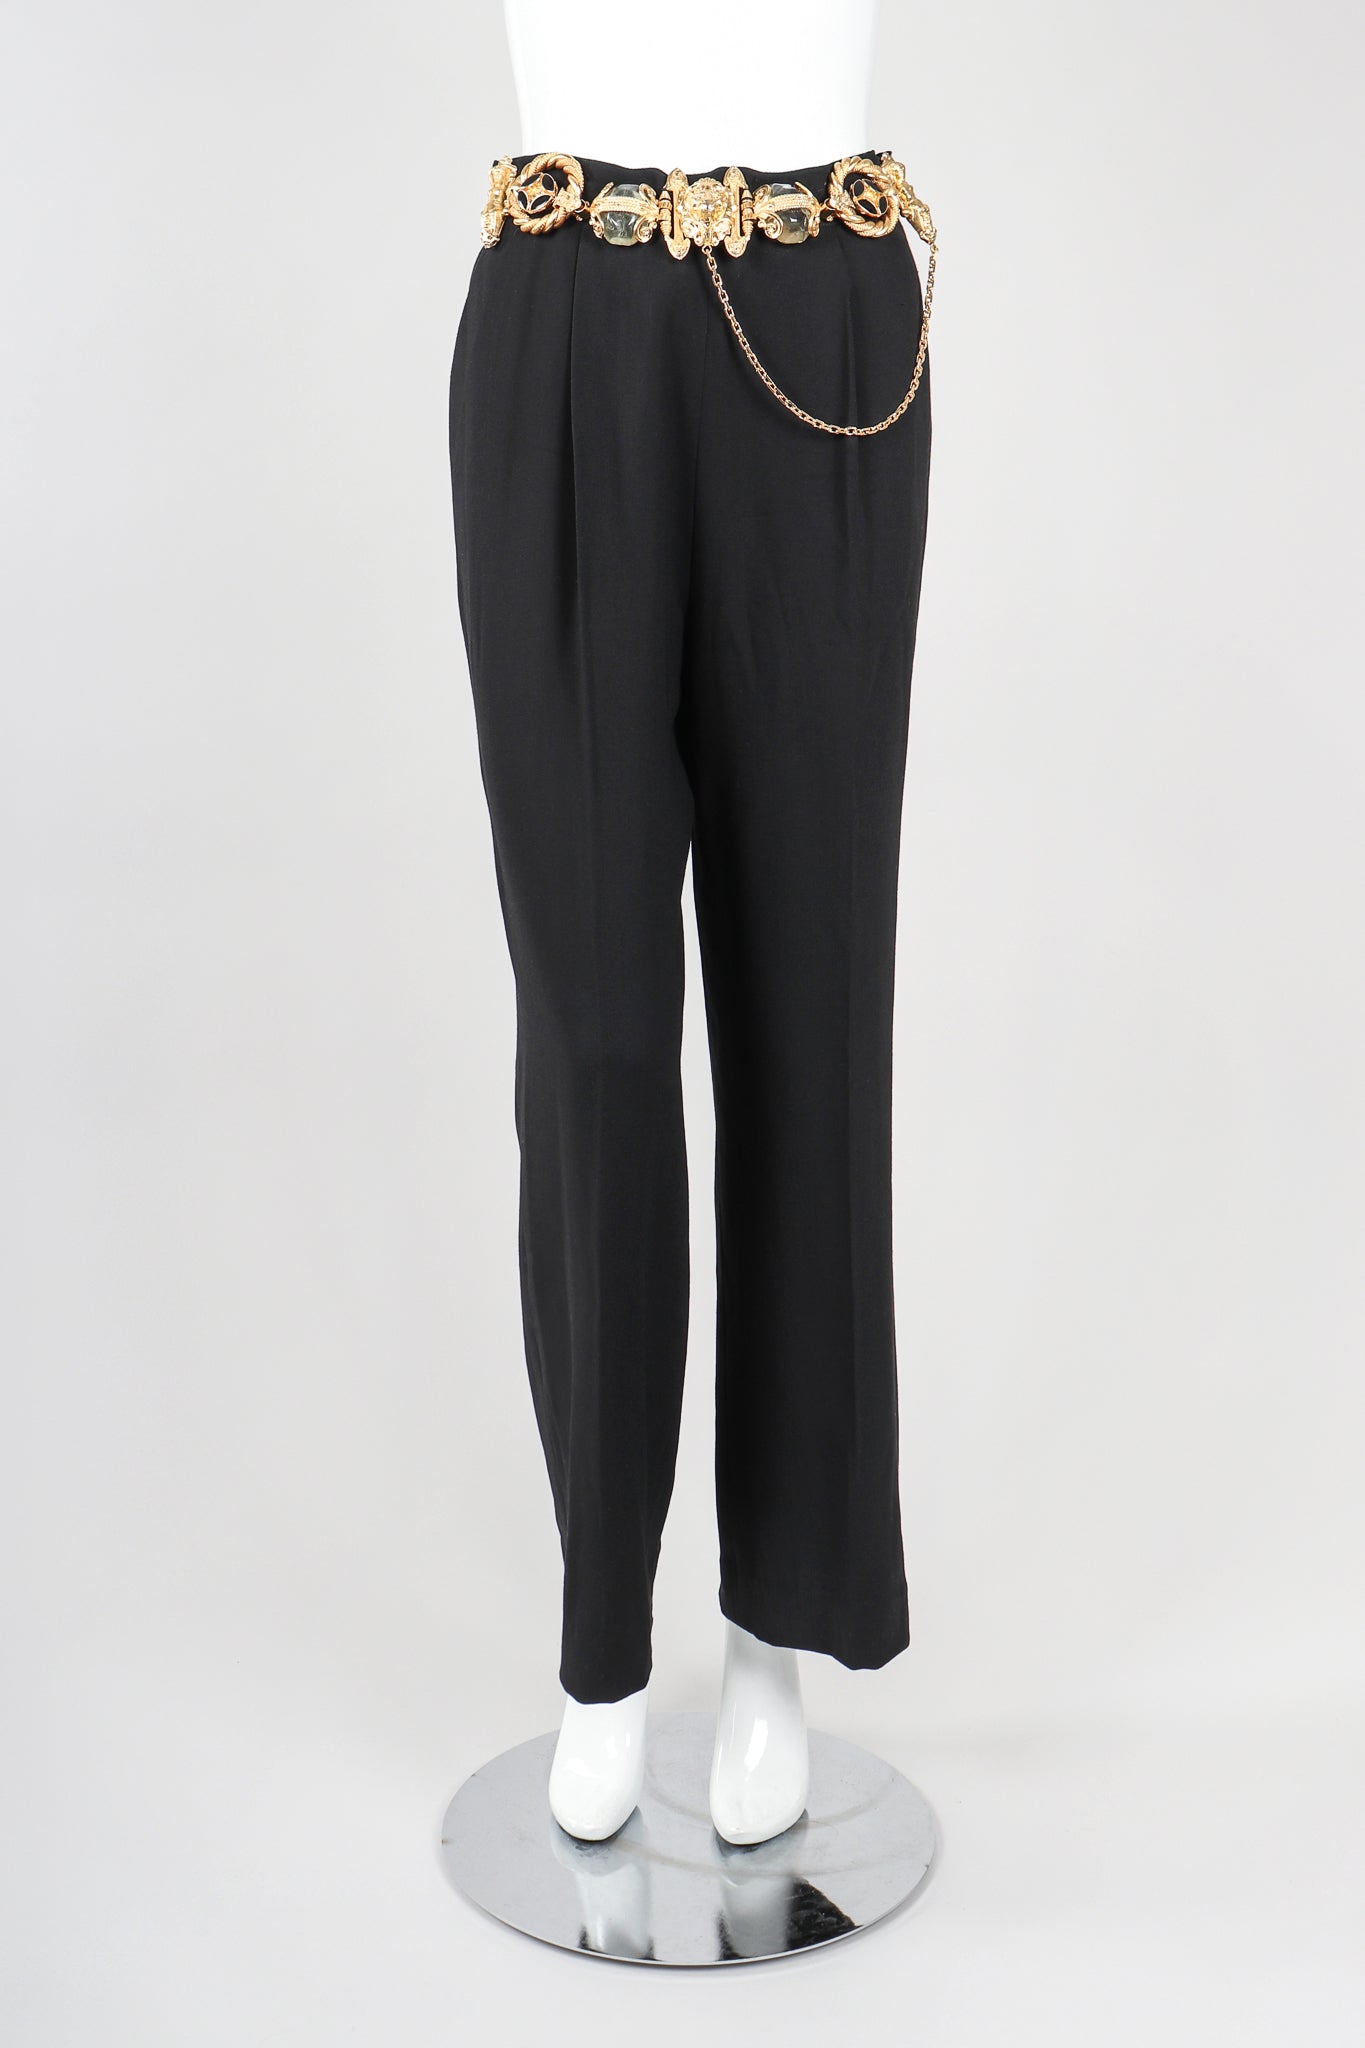 Recess Vintage Gianfranco Ferre Black Pant With Gold Belt on Mannequin